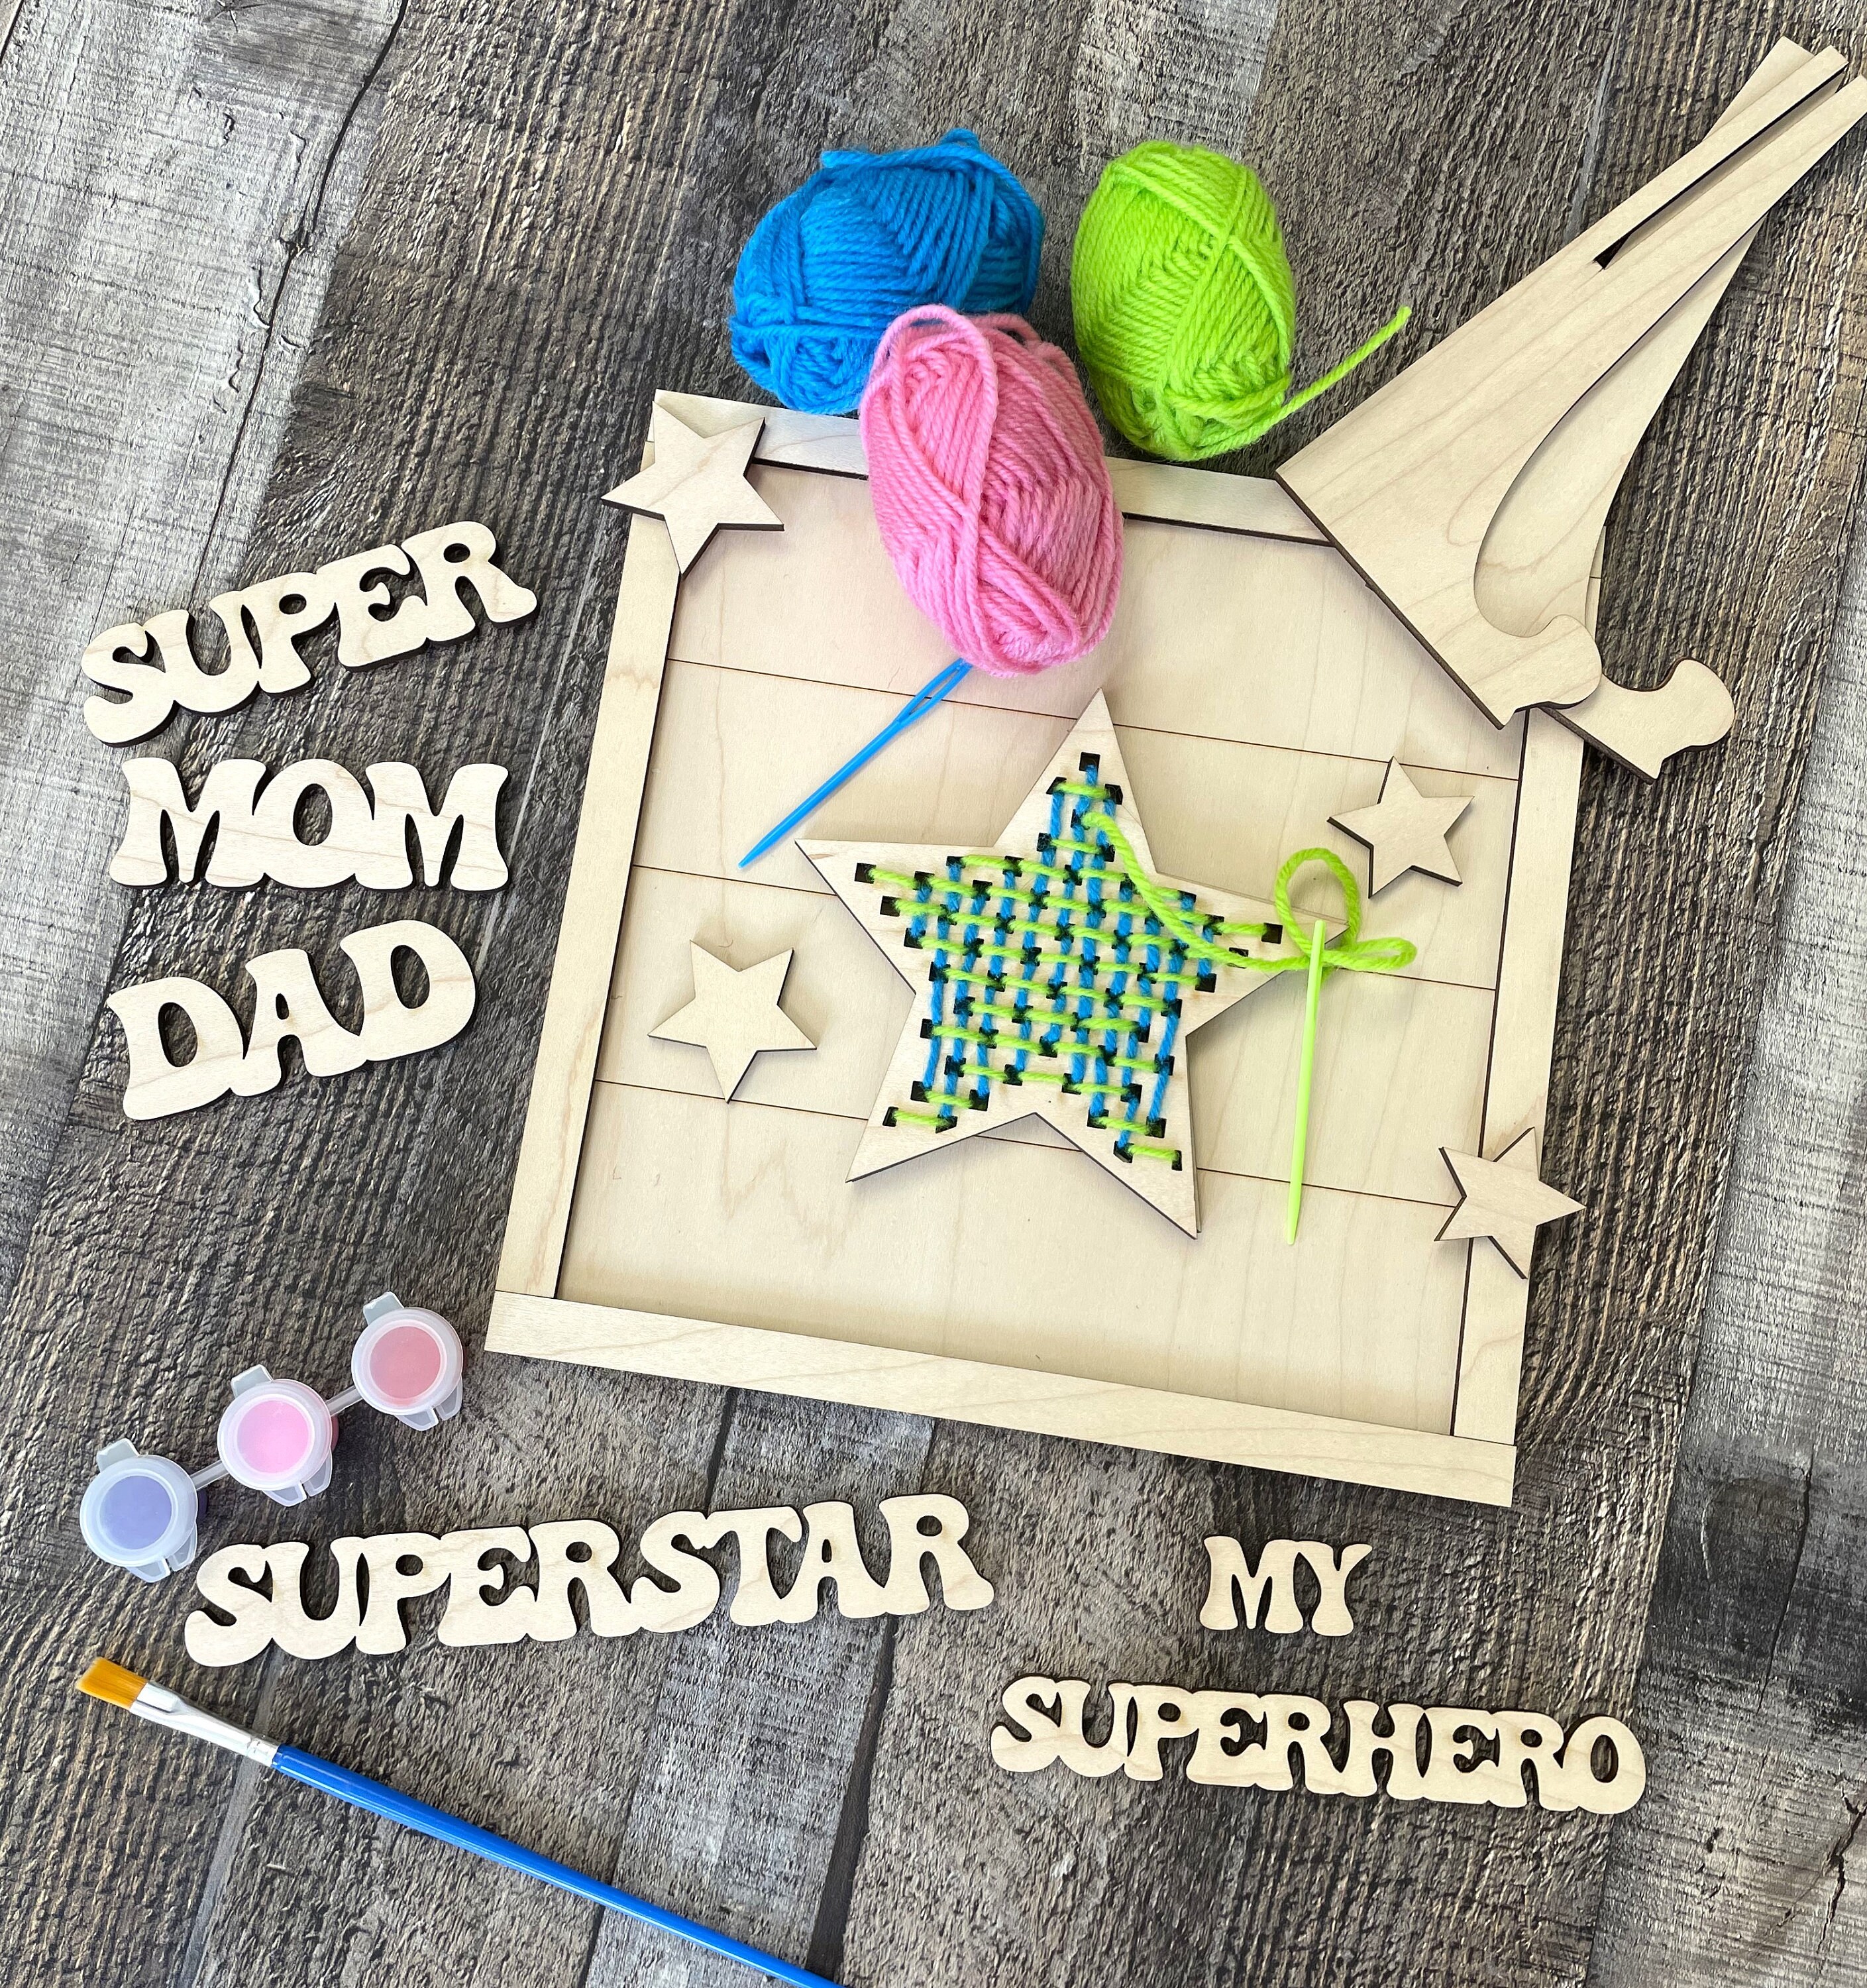 Extra Yarn - Paging Supermom